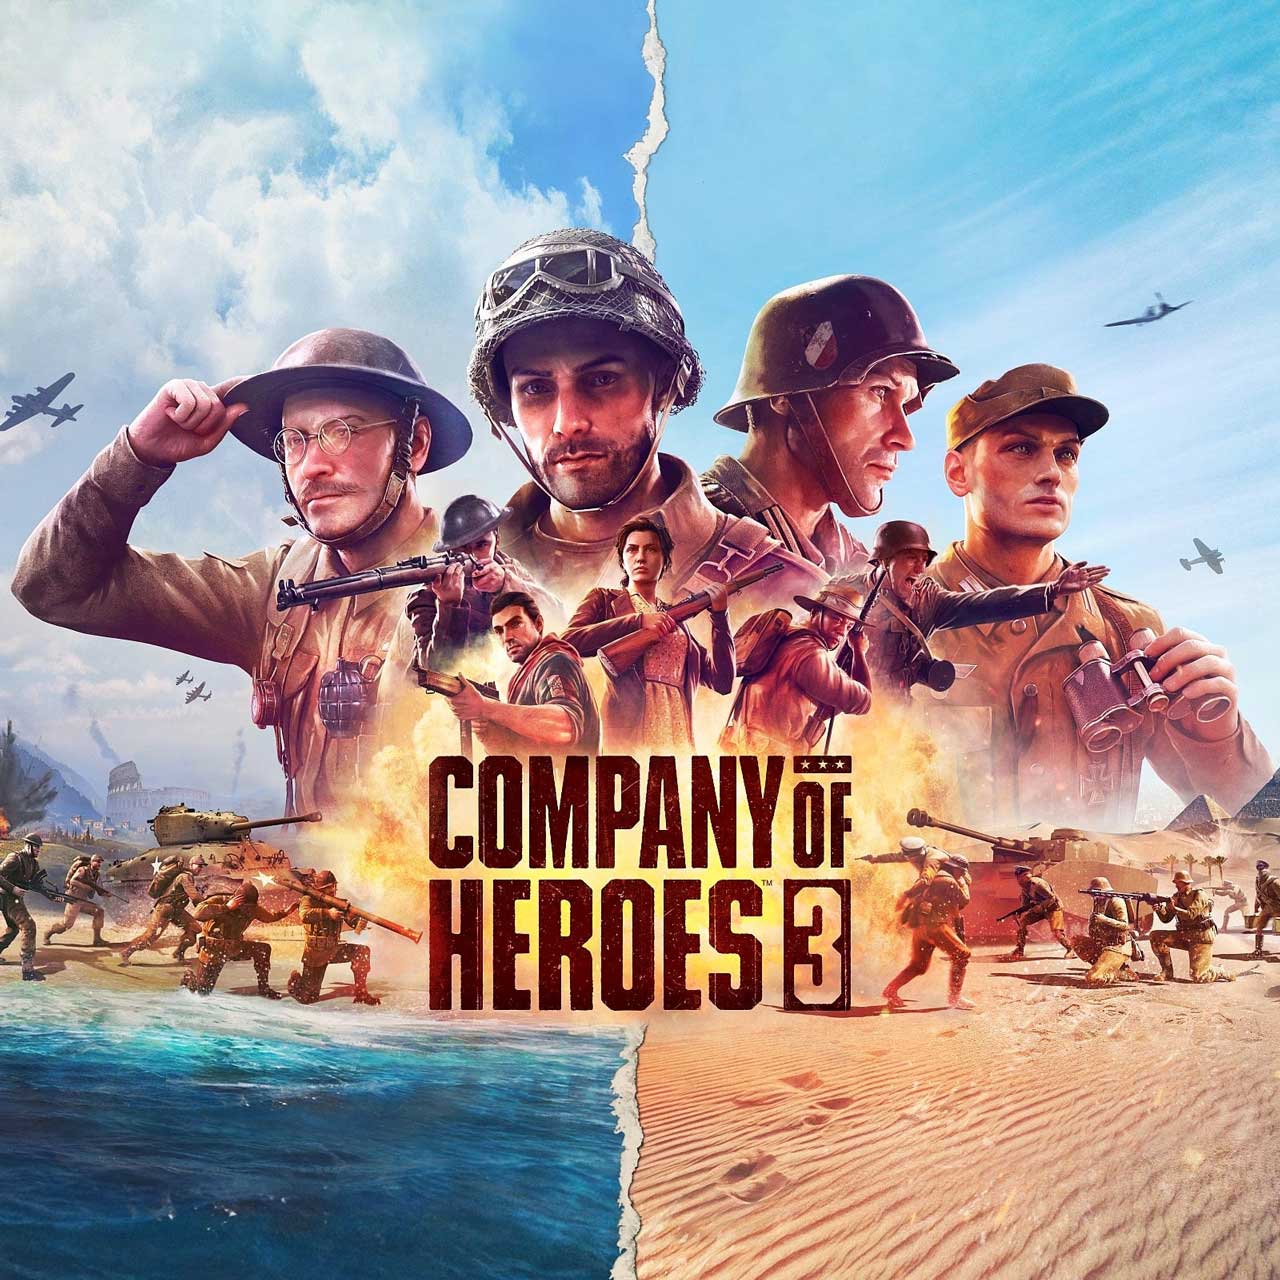 Company of Heroes 3 pc eshteraki 9 - خرید سی دی کی اشتراکی اکانت بازی Company of Heroes 3 برای کامپیوتر